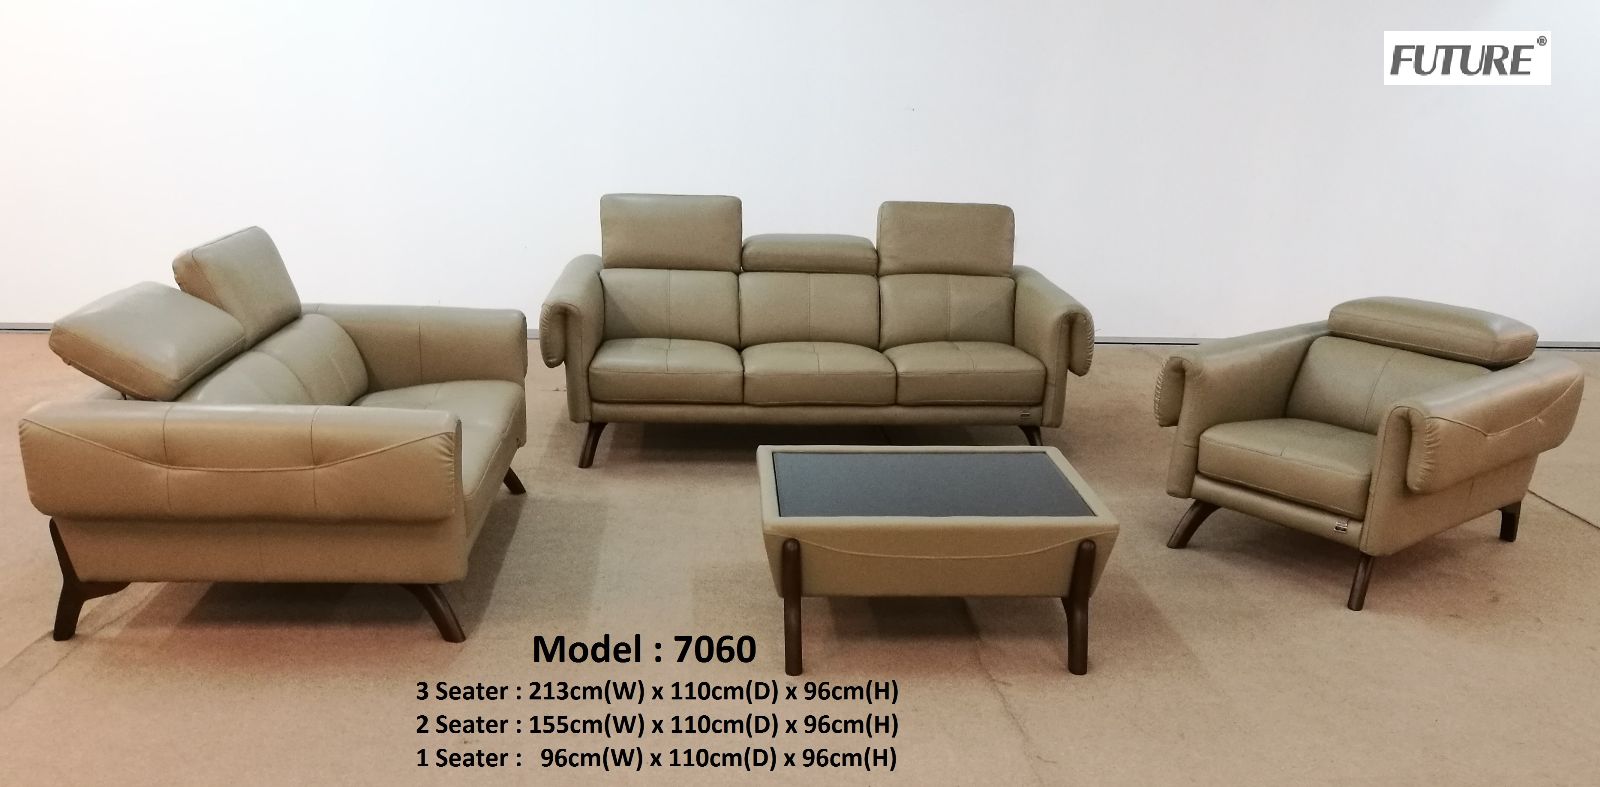 Sofa future model 7060